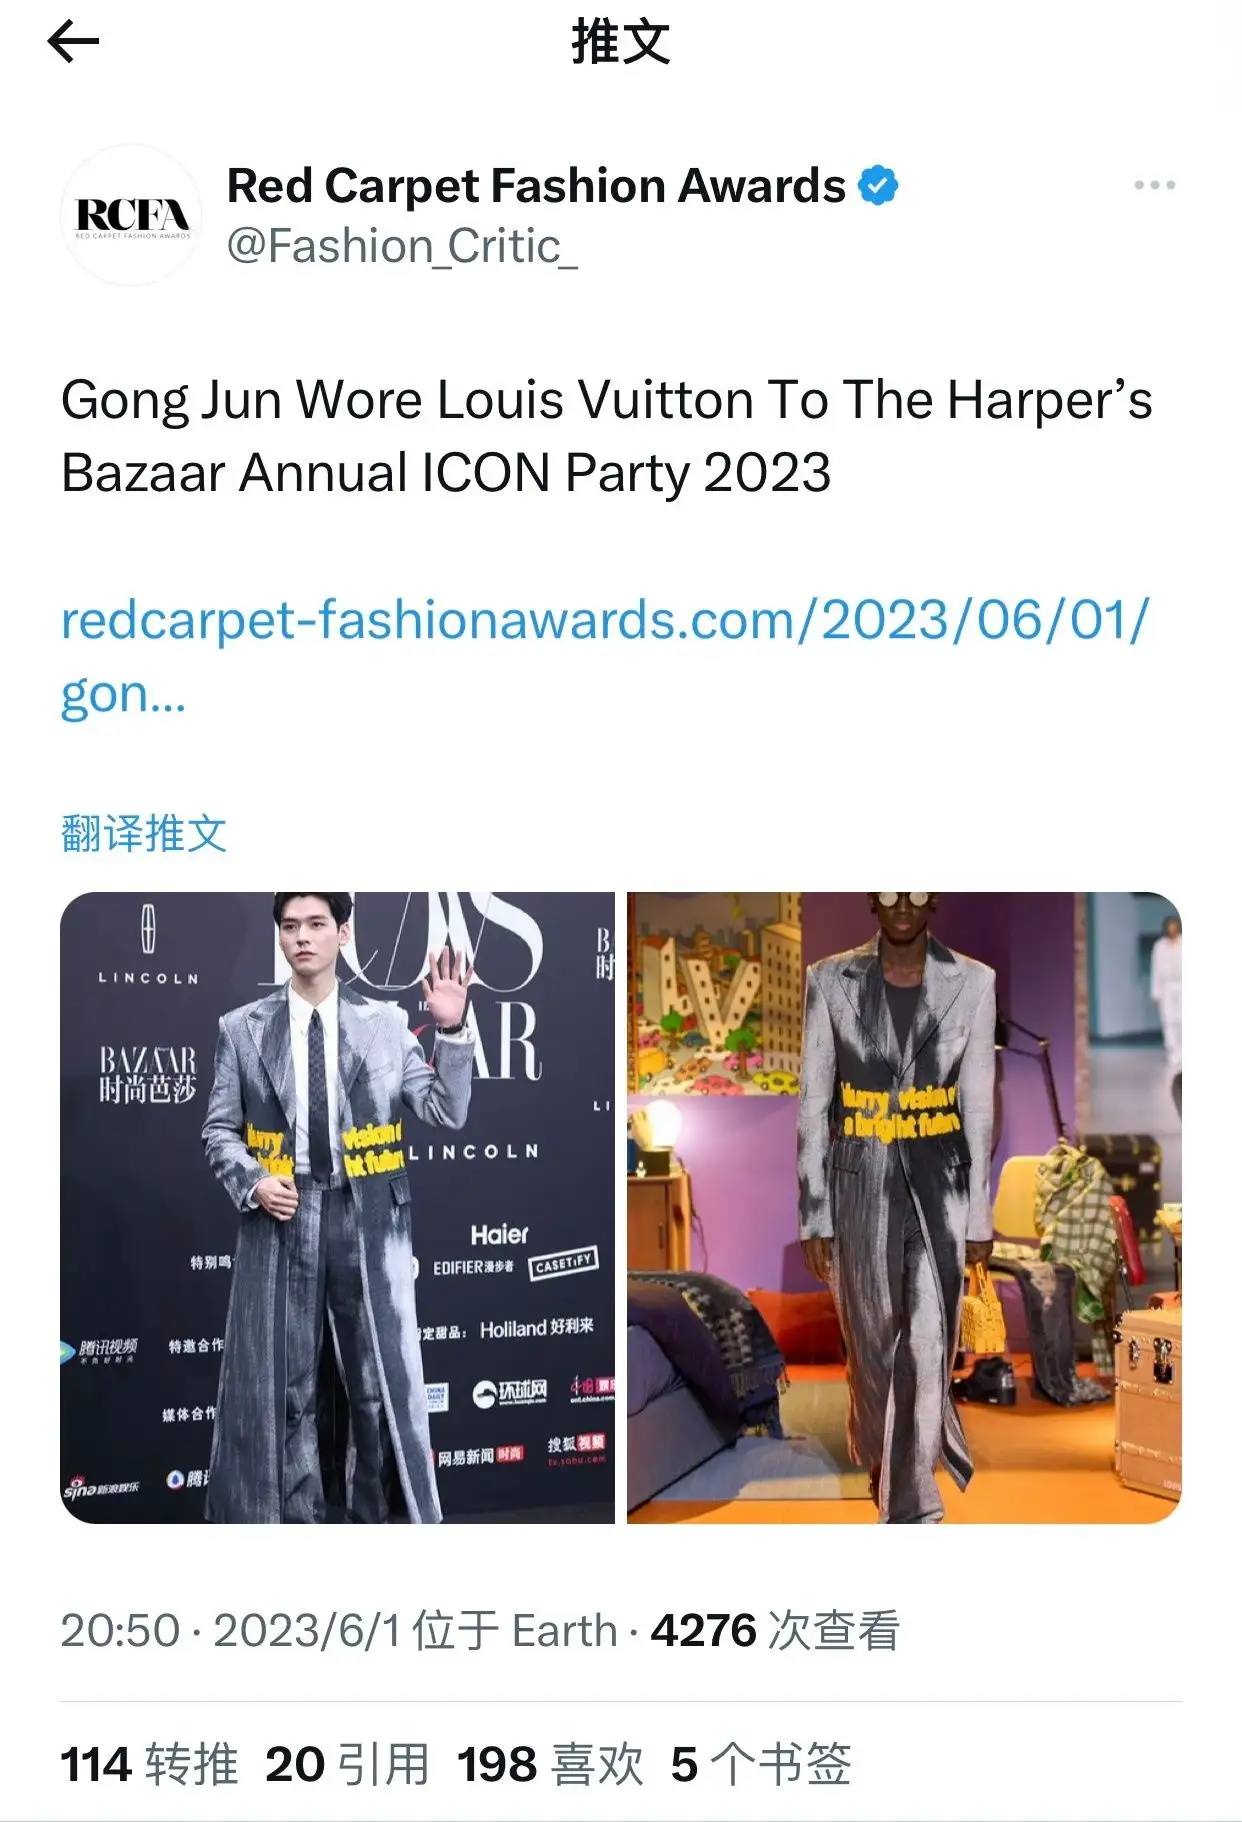 Gong Jun Wore Louis Vuitton To The Harper's Bazaar Annual ICON